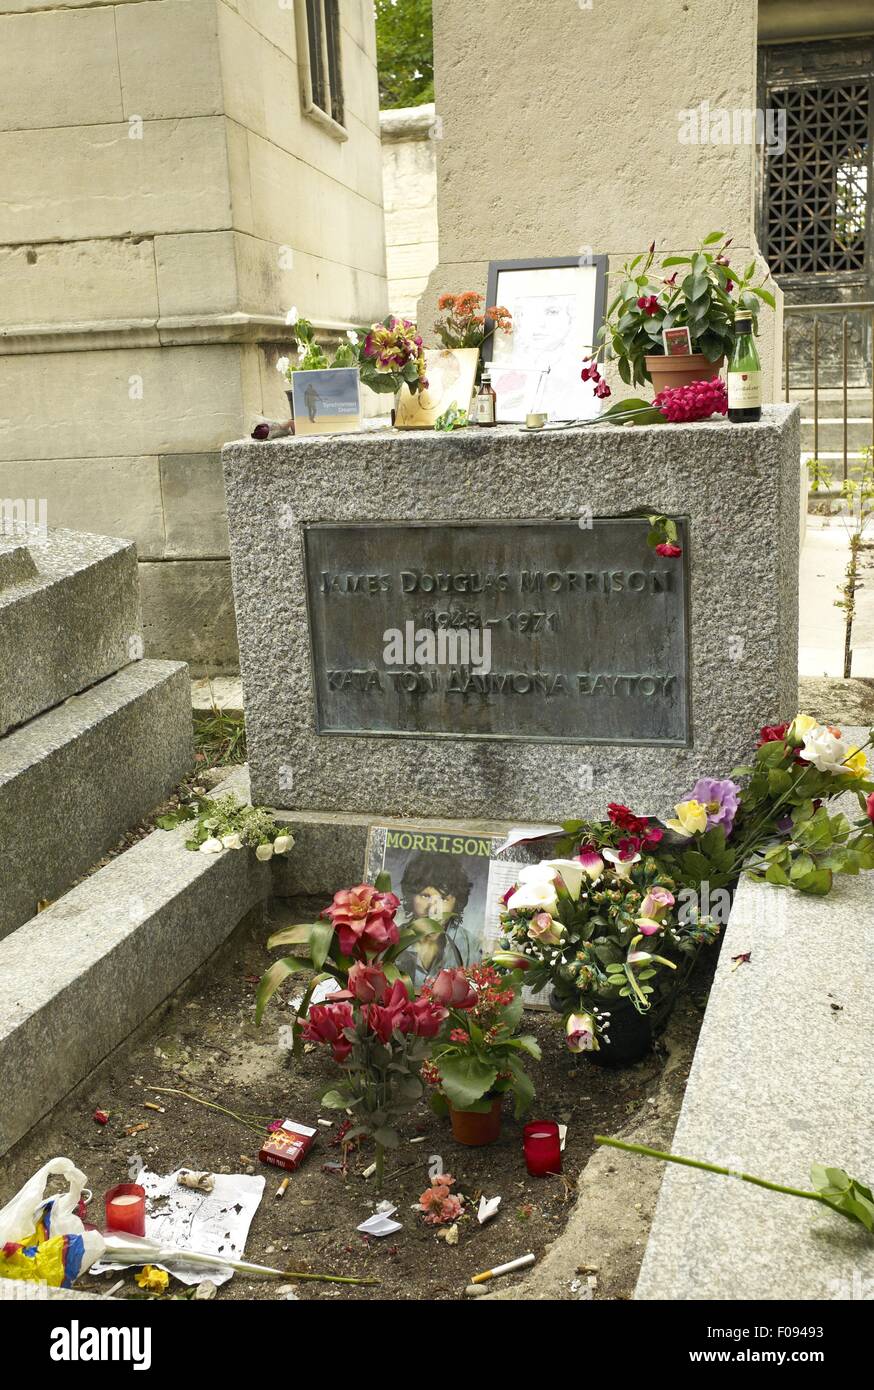 Grave of James Douglas and Jim Morrison at Pere Lachaise Cemetery, Paris, France Stock Photo